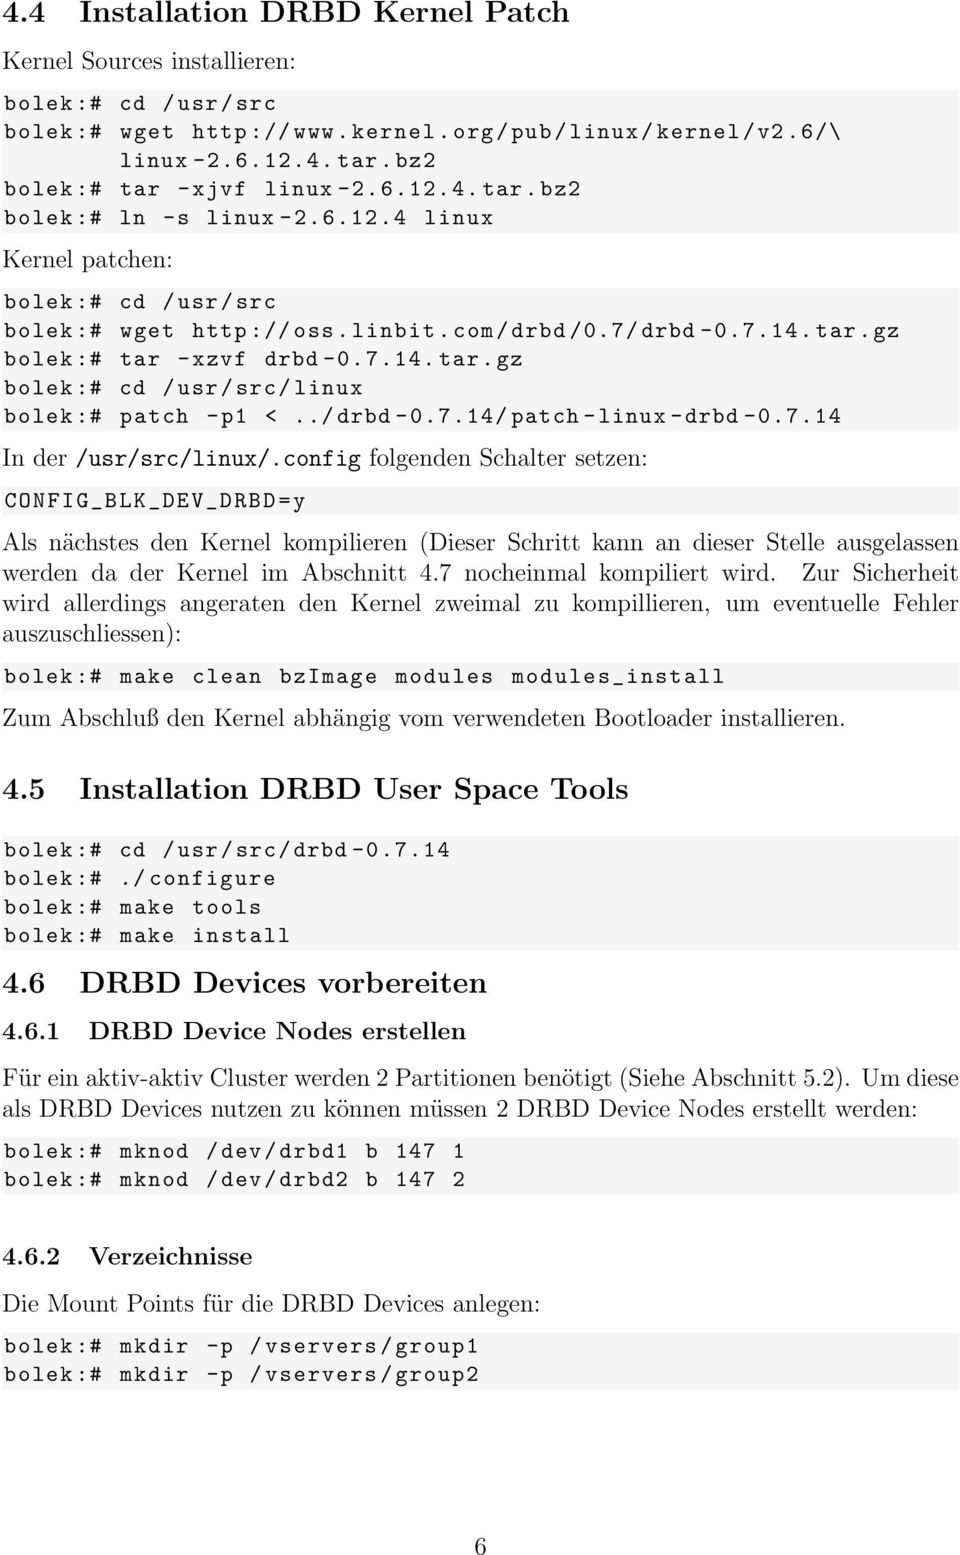 tar.gz bolek :# tar - xzvf drbd -0.7.14. tar. gz bolek :# cd / usr / src / linux bolek :# patch -p1 <../ drbd -0.7.14/ patch - linux -drbd -0.7.14 In der /usr/src/linux/.